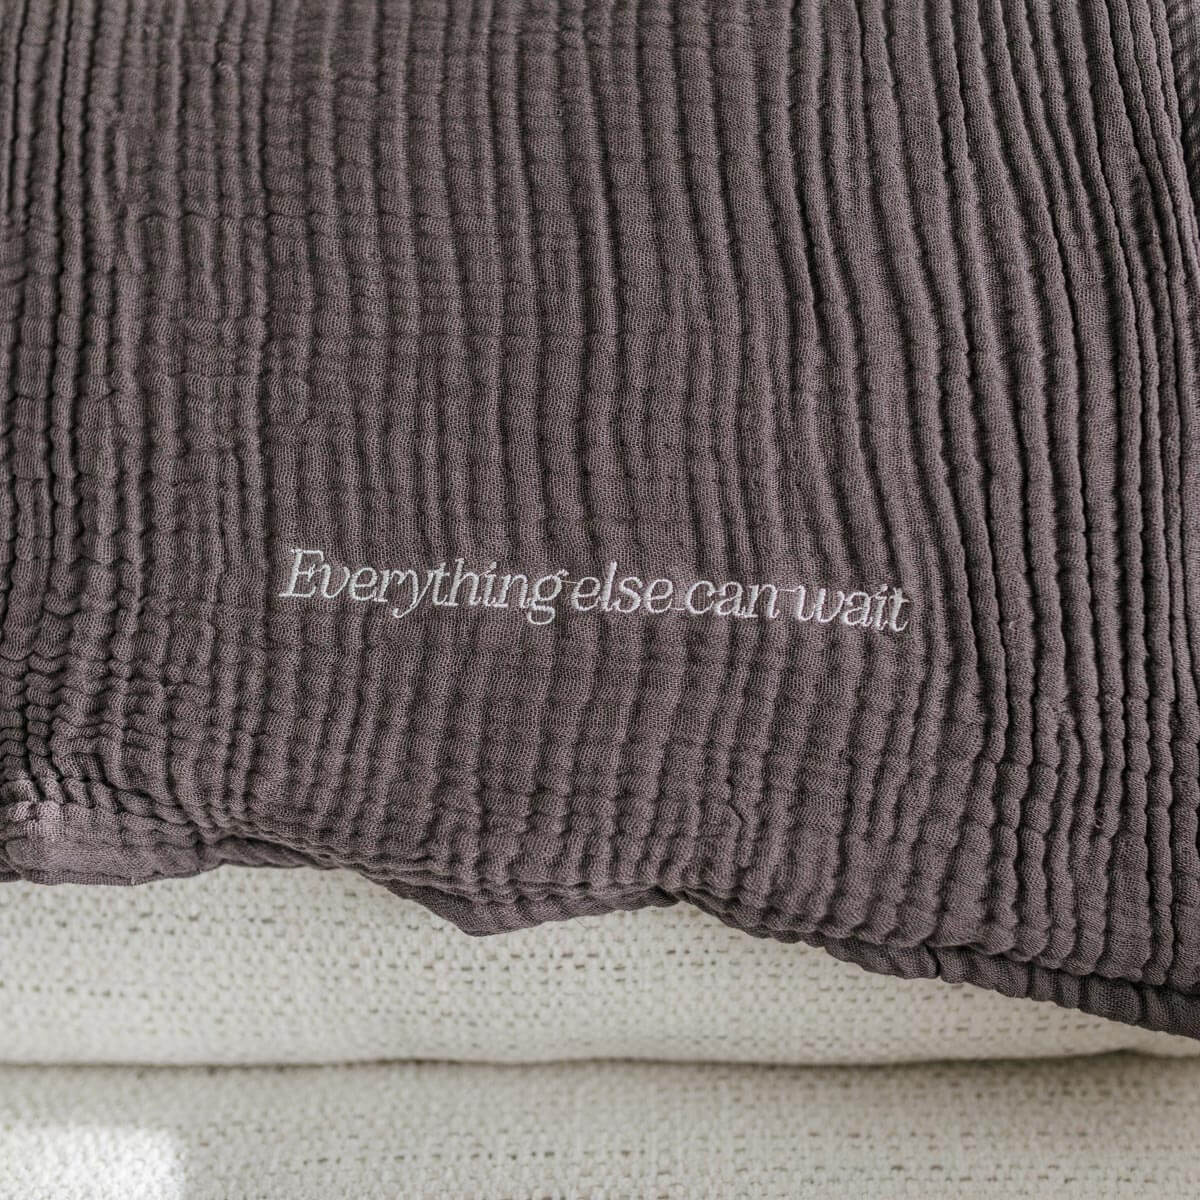 Inspirational Muslin Blanket